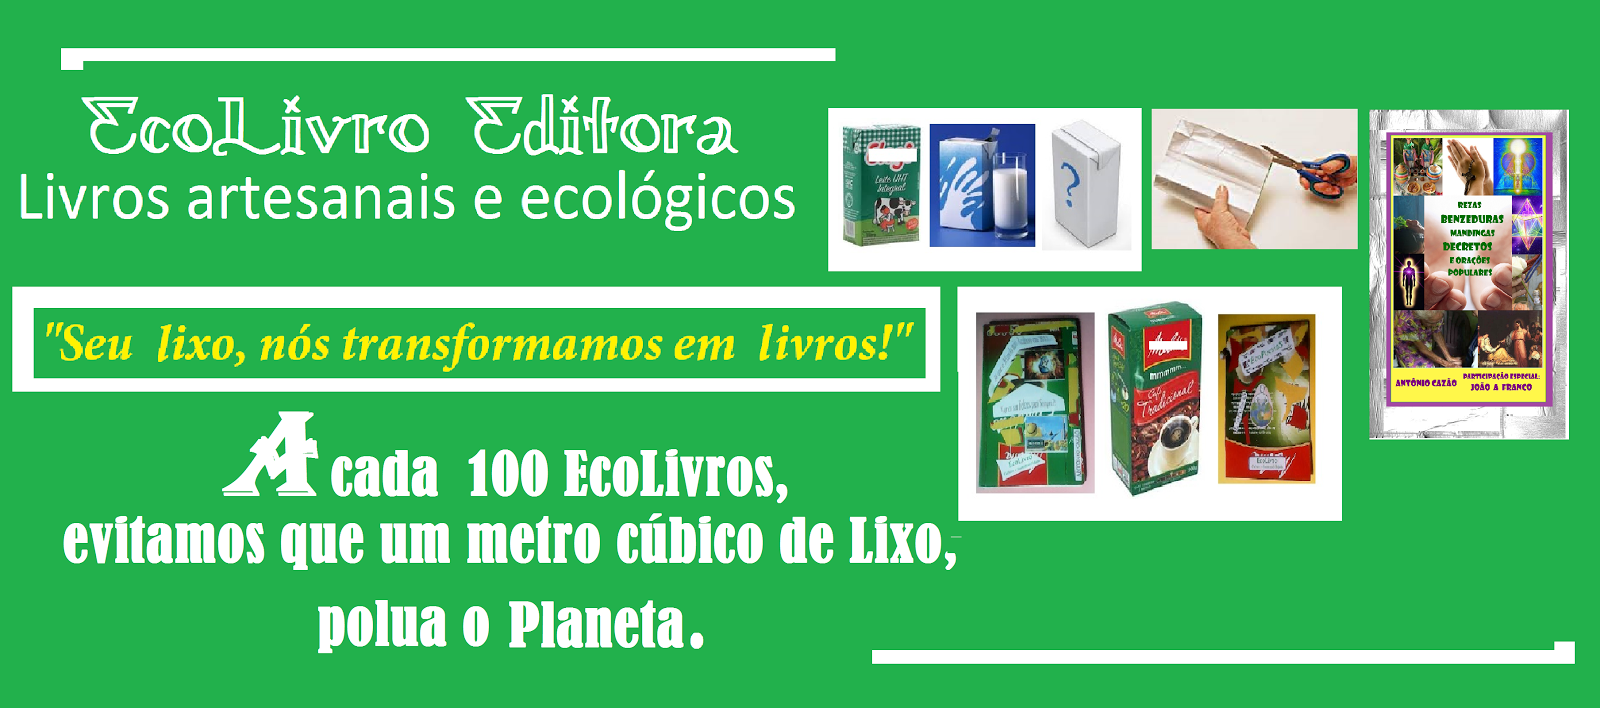 EcoLivro Editora